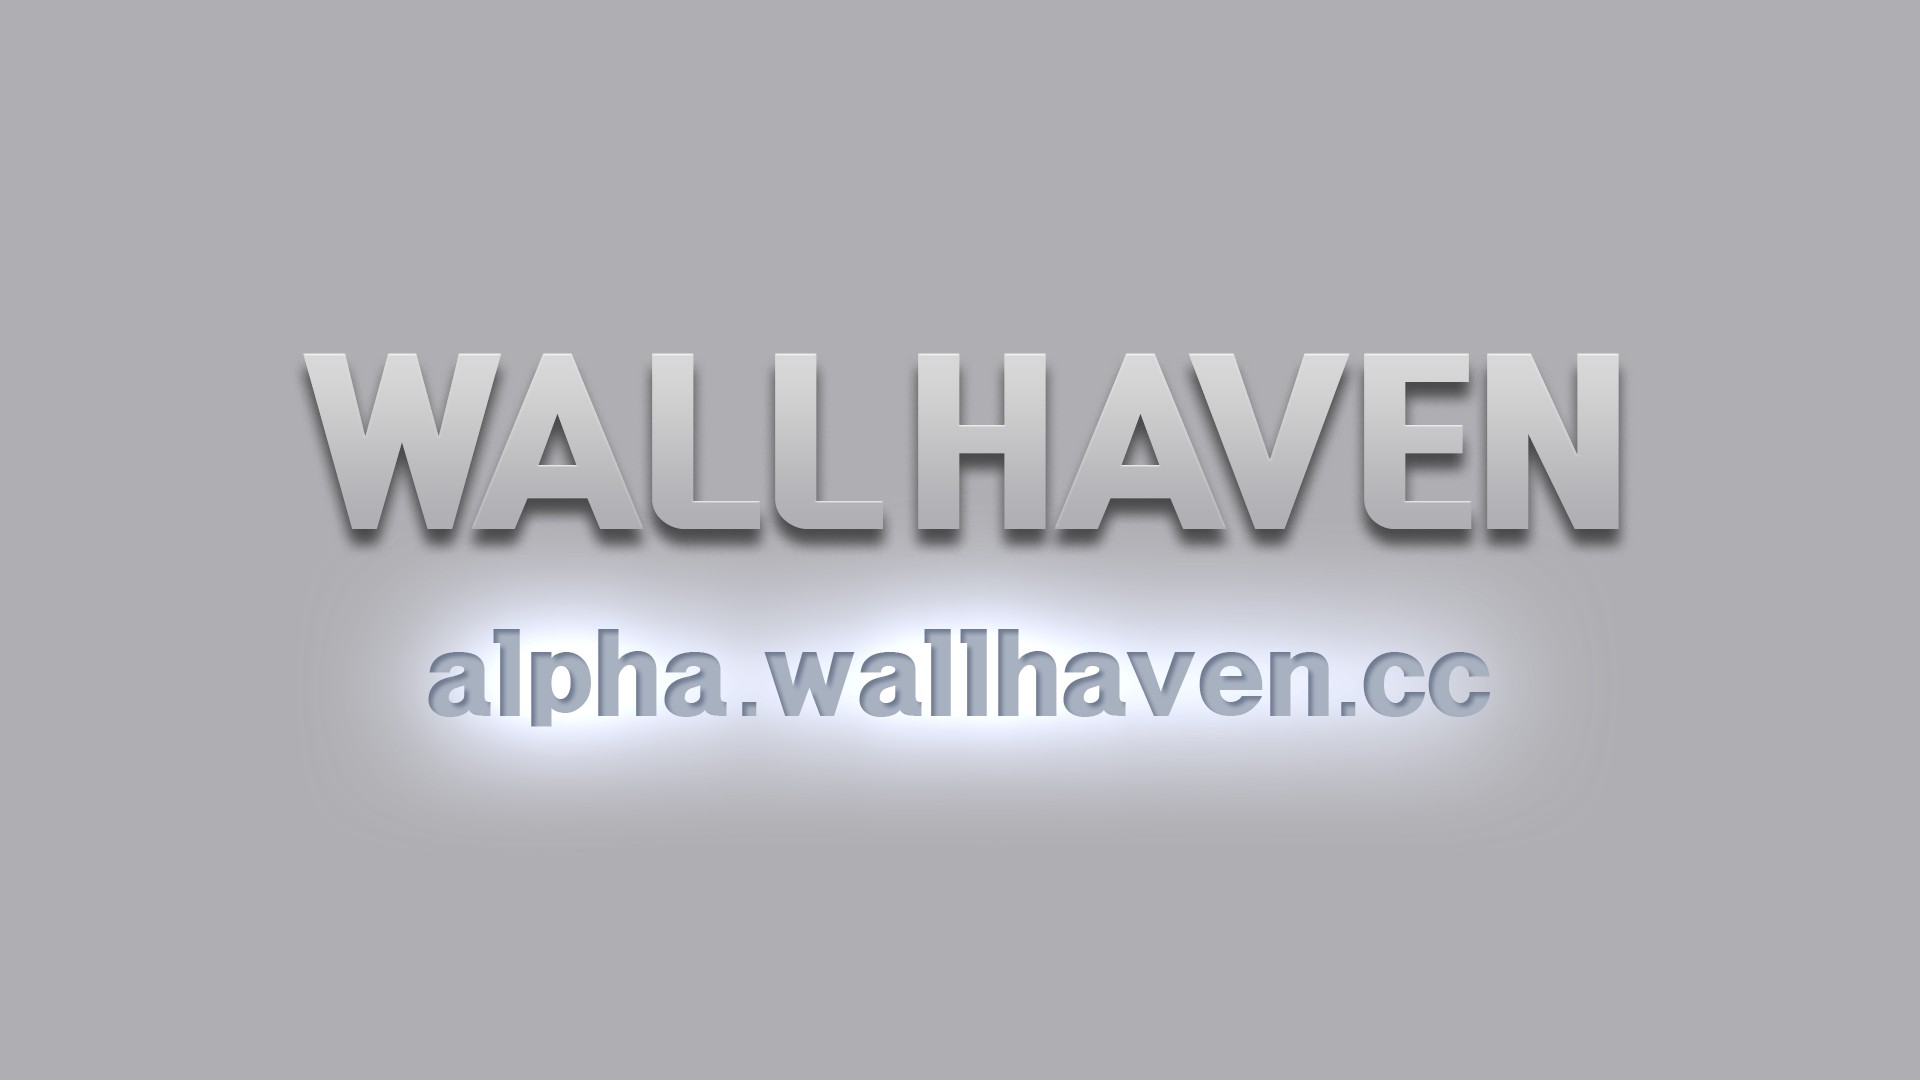 wallhaven, Website, Simple background Wallpaper